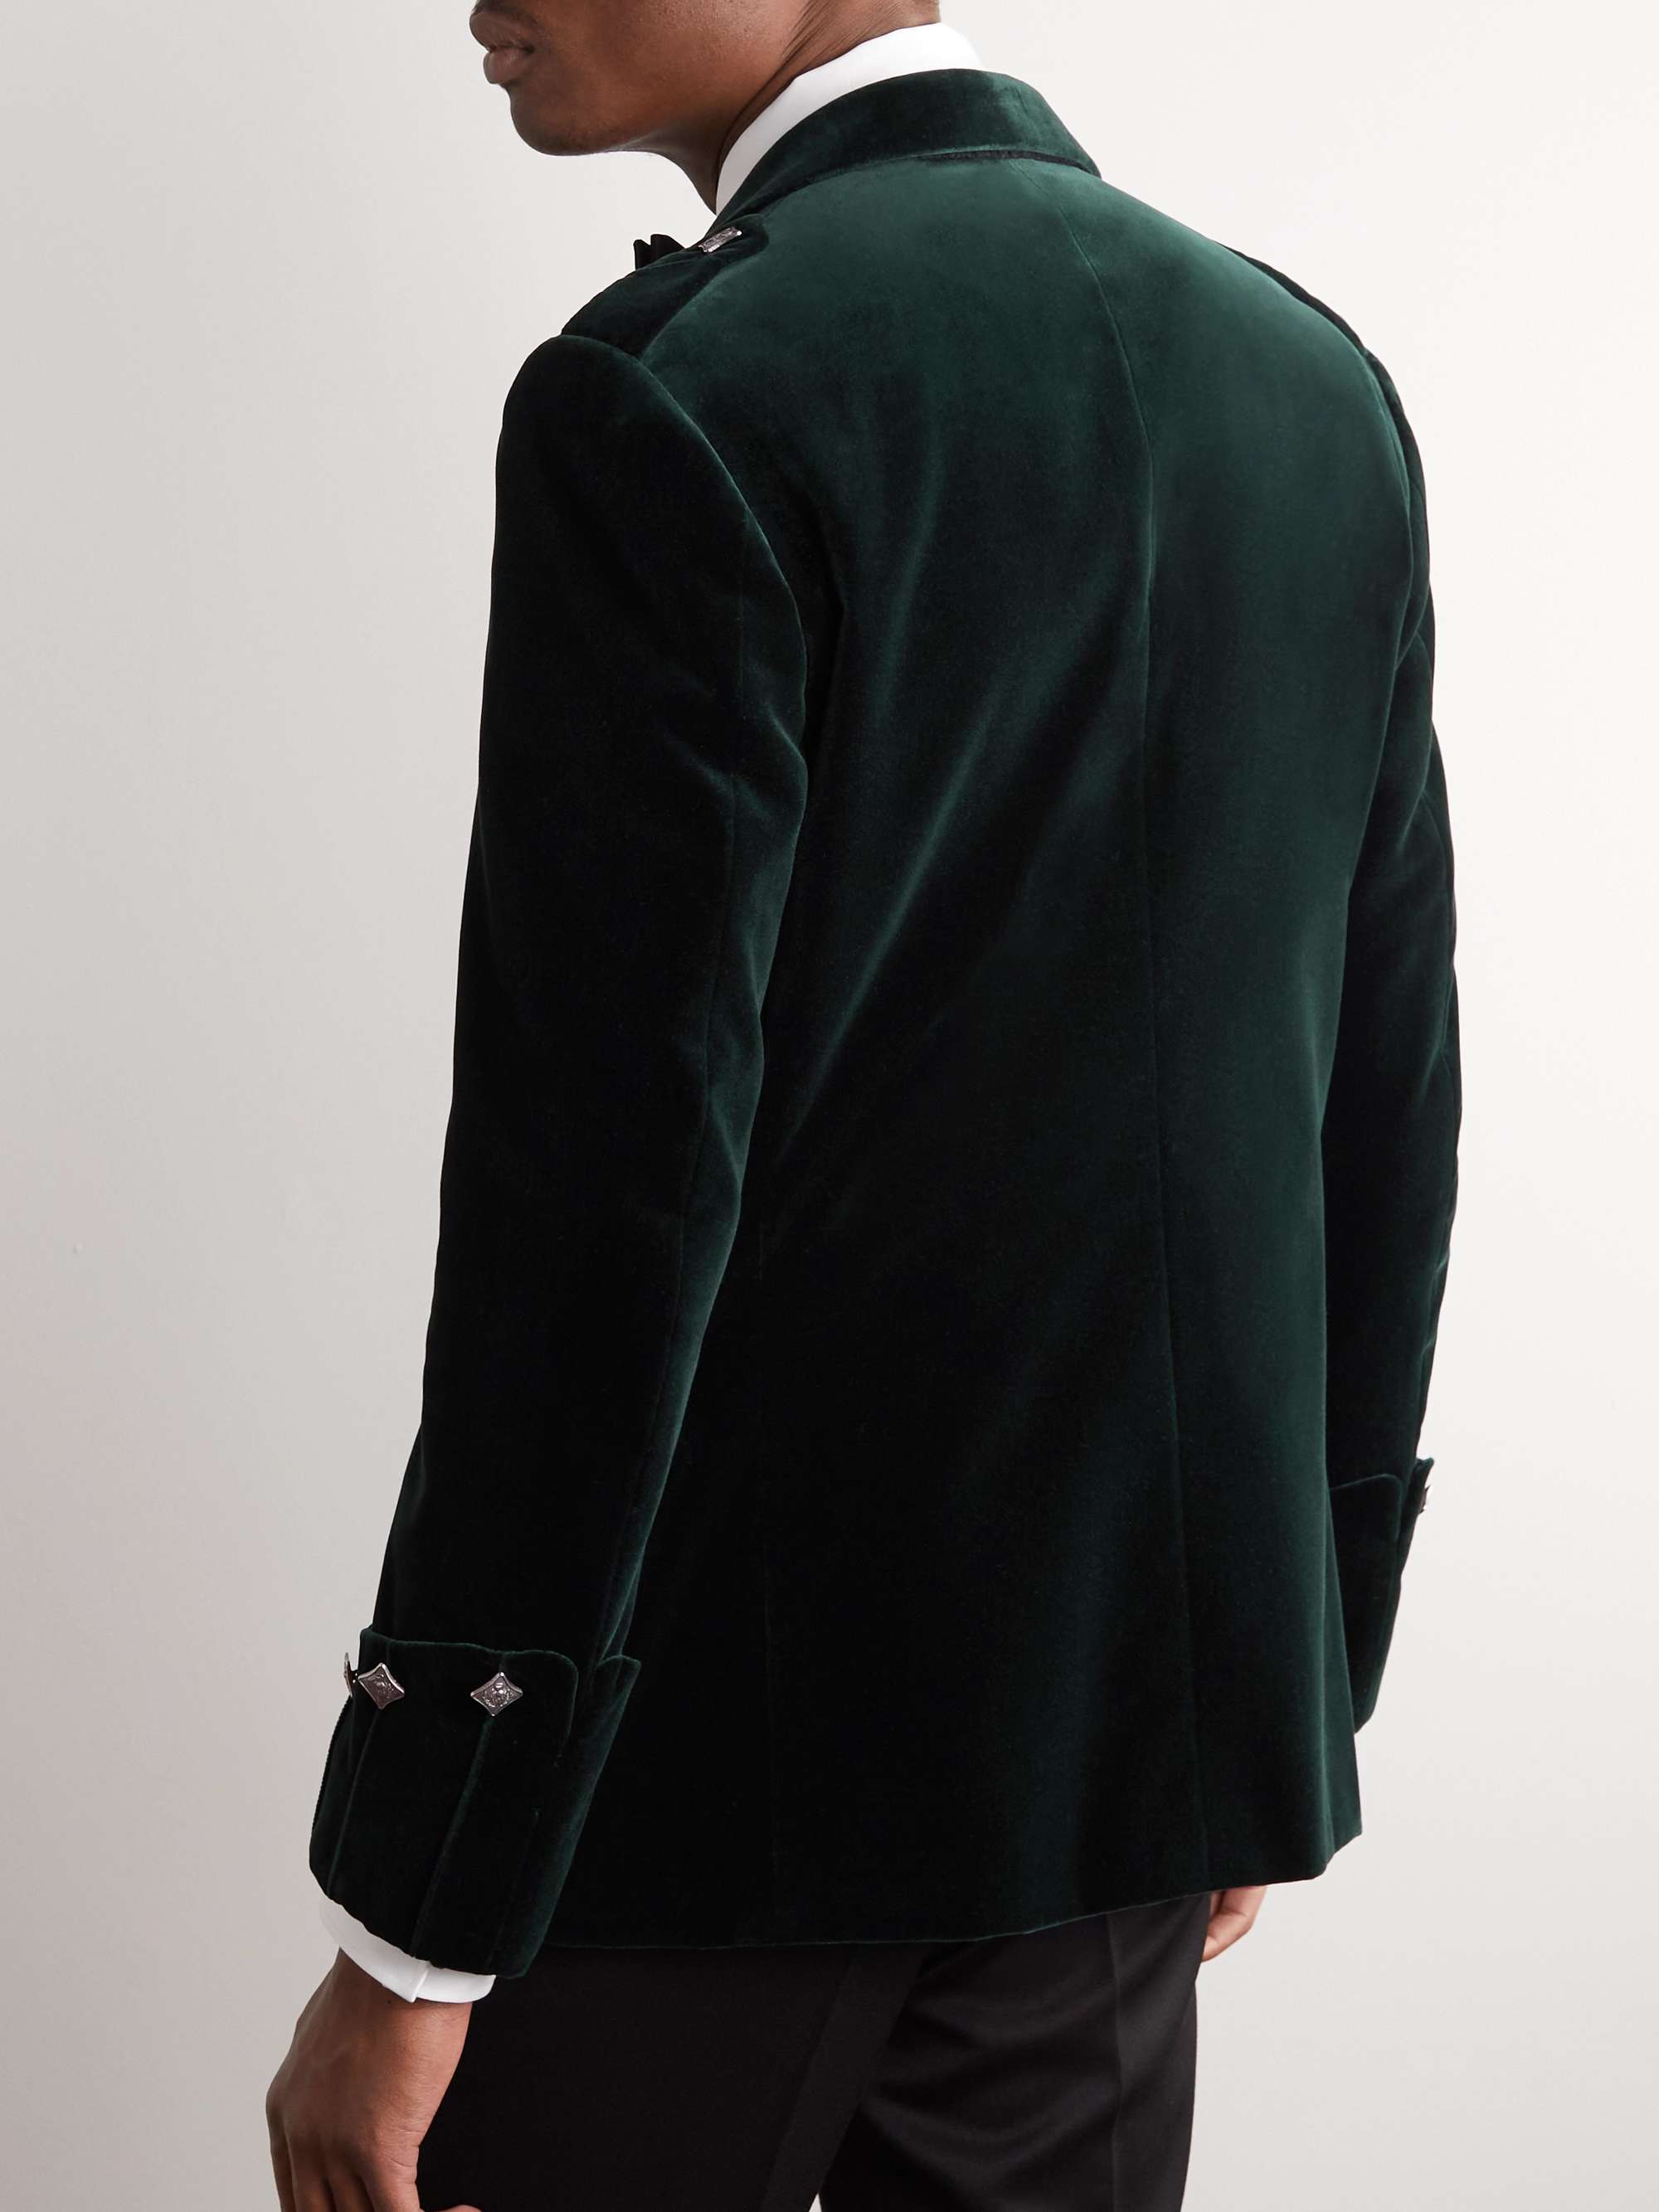 RALPH LAUREN PURPLE LABEL Scottish Cotton-Velvet Tuxedo Jacket